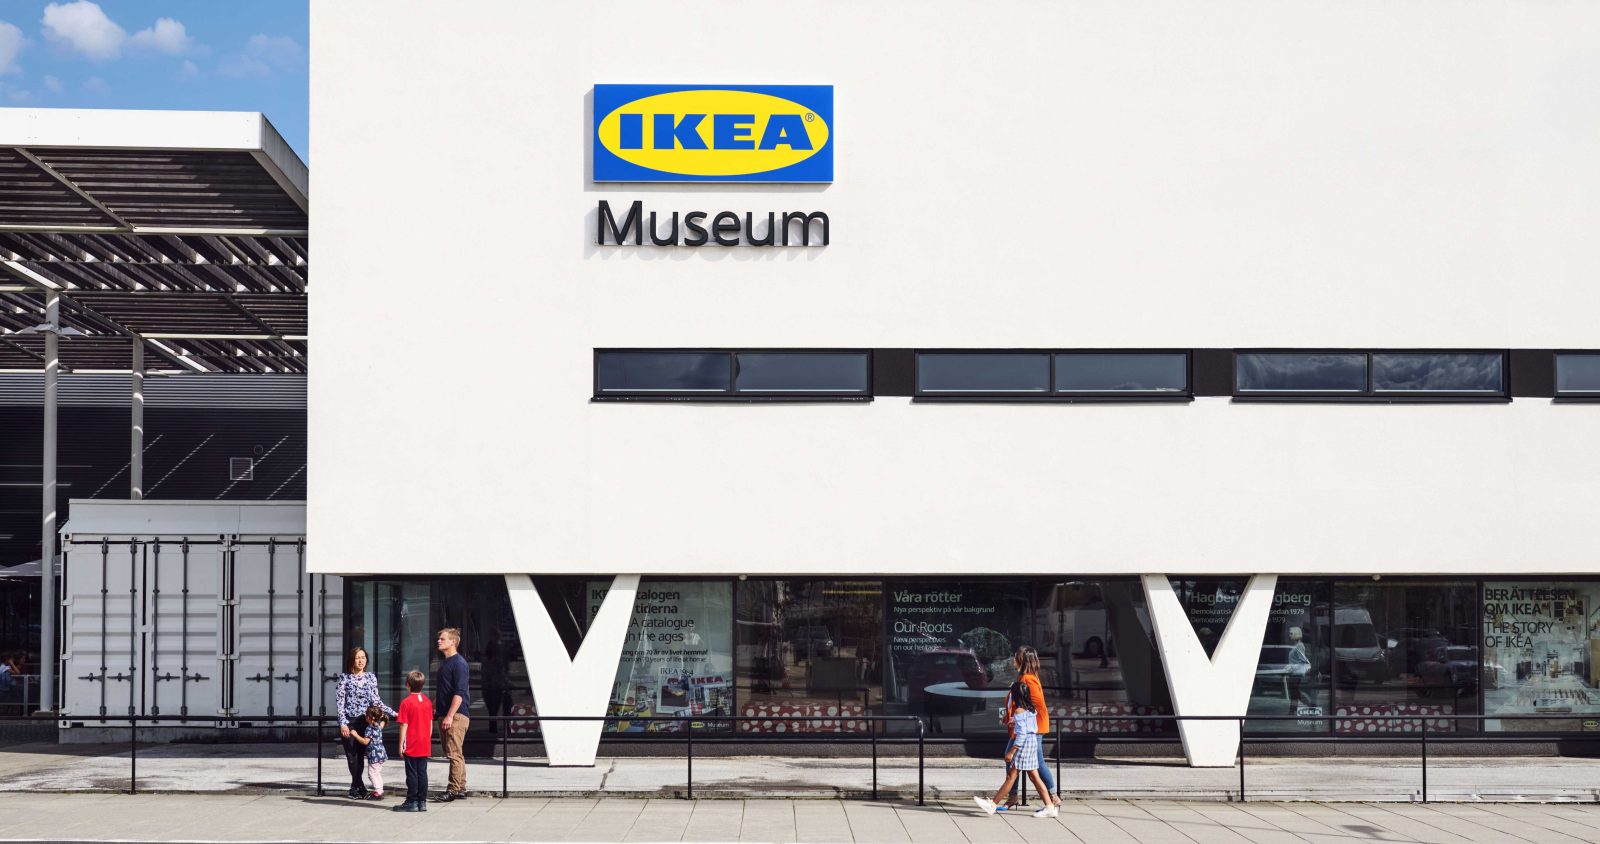 IKEA Museum goes digital – IKEA Global